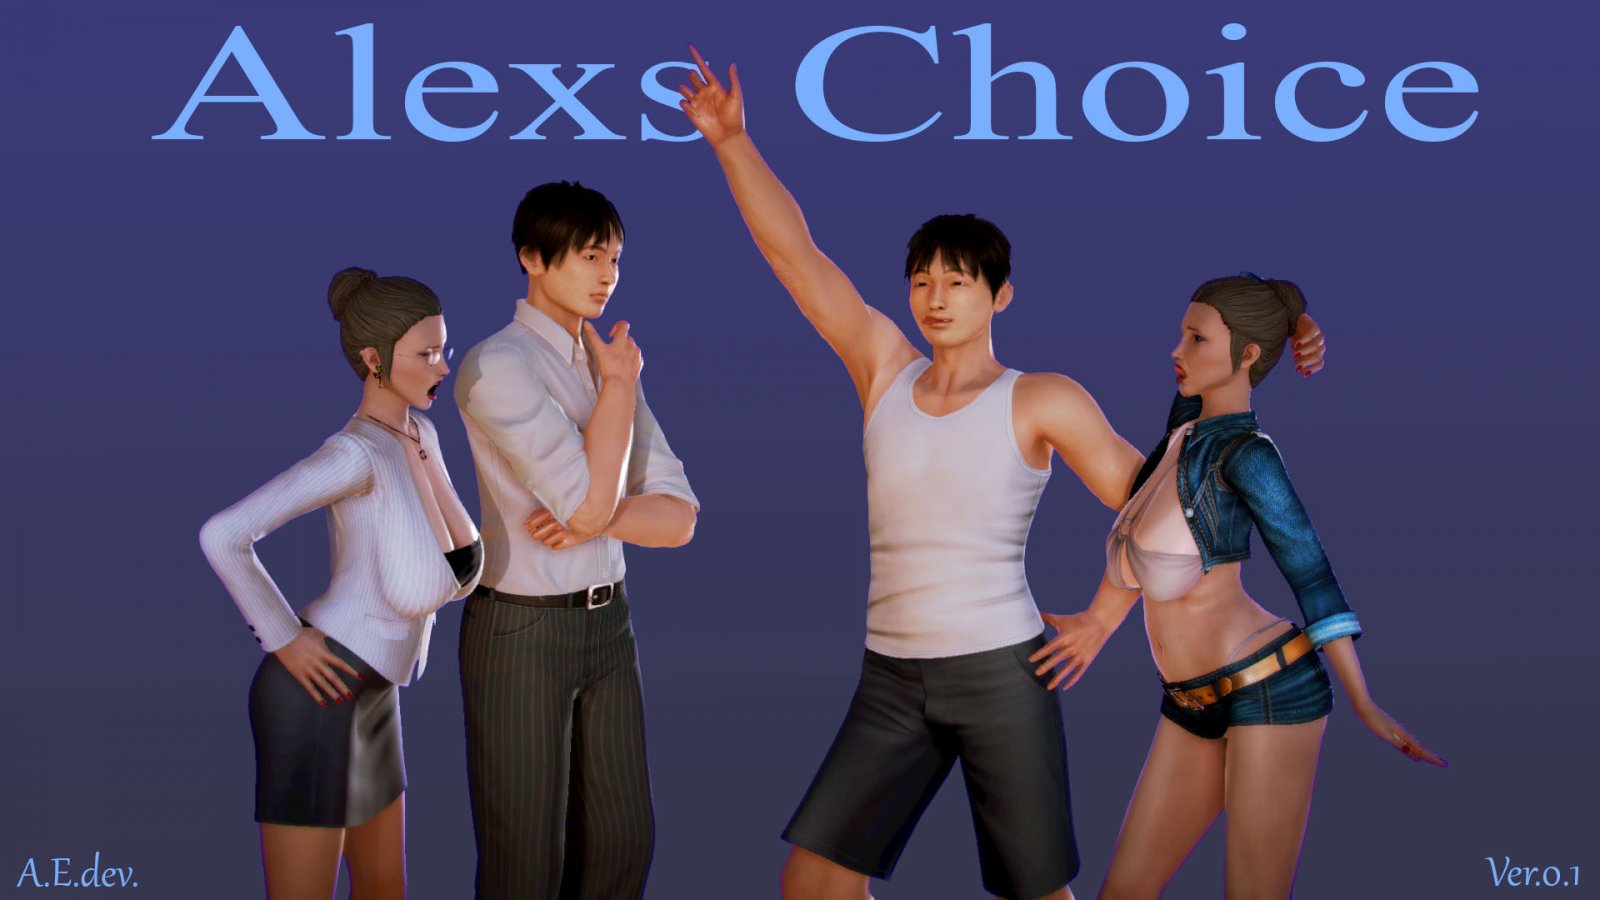 Alexs Choice poster